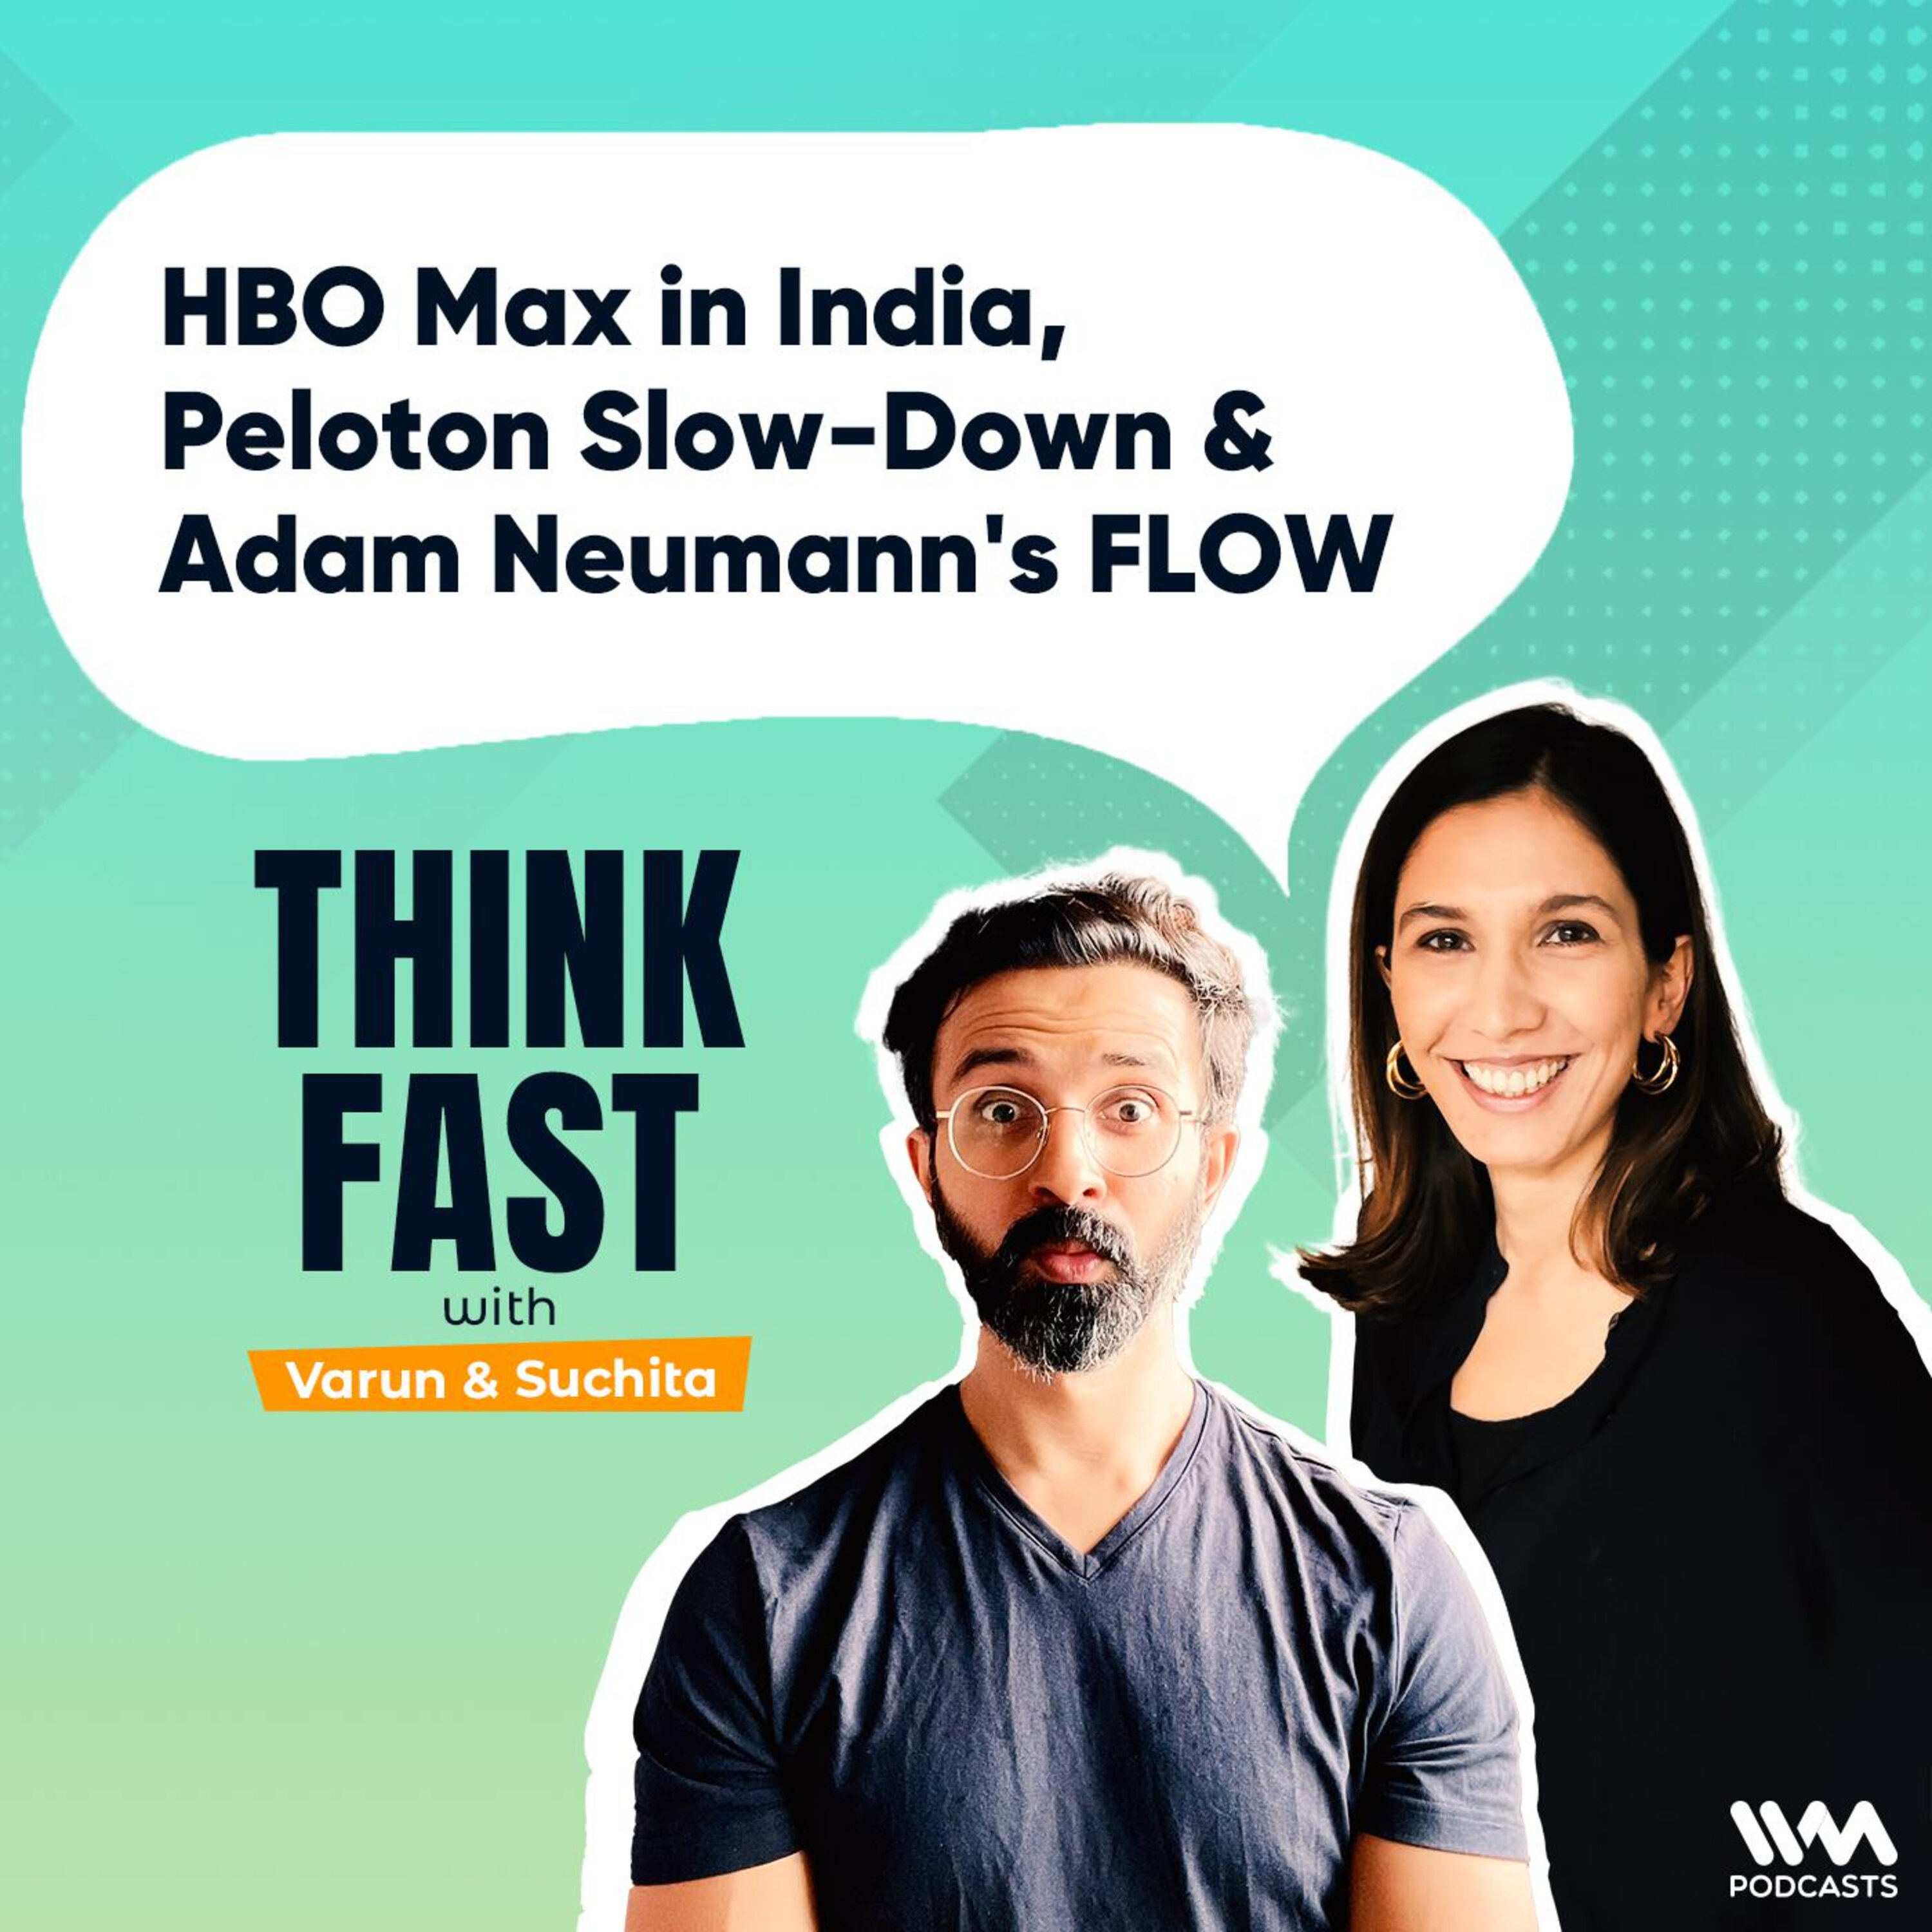 HBO Max in India, Peloton Slow-Down & Adam Neumann's FLOW